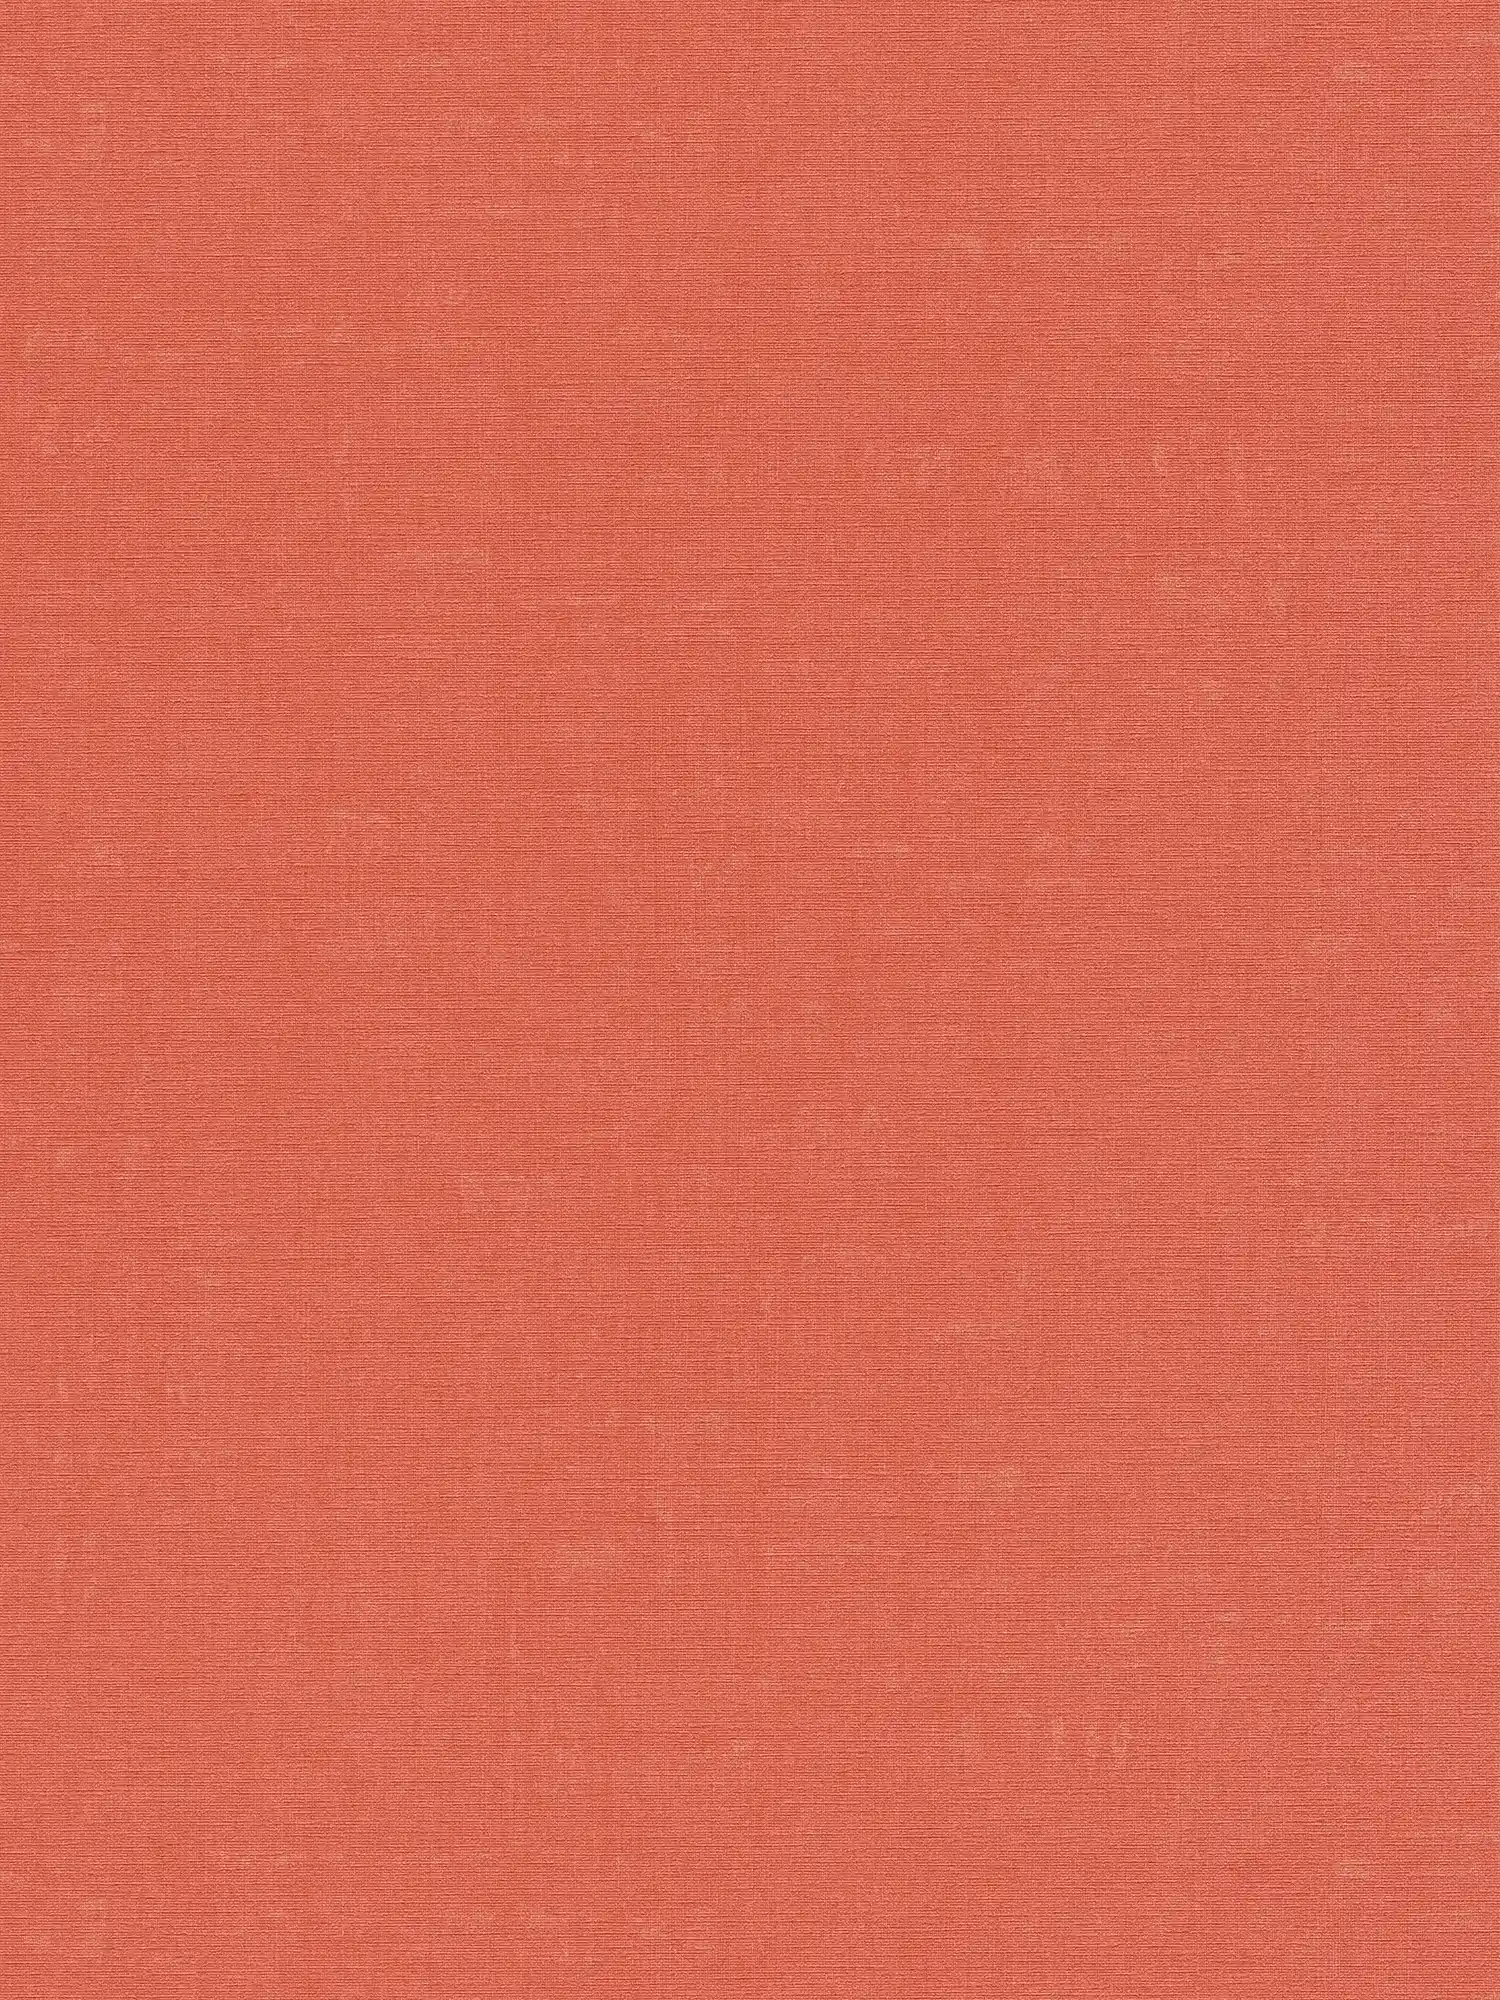 Plain wallpaper with mottled pattern - orange, red
